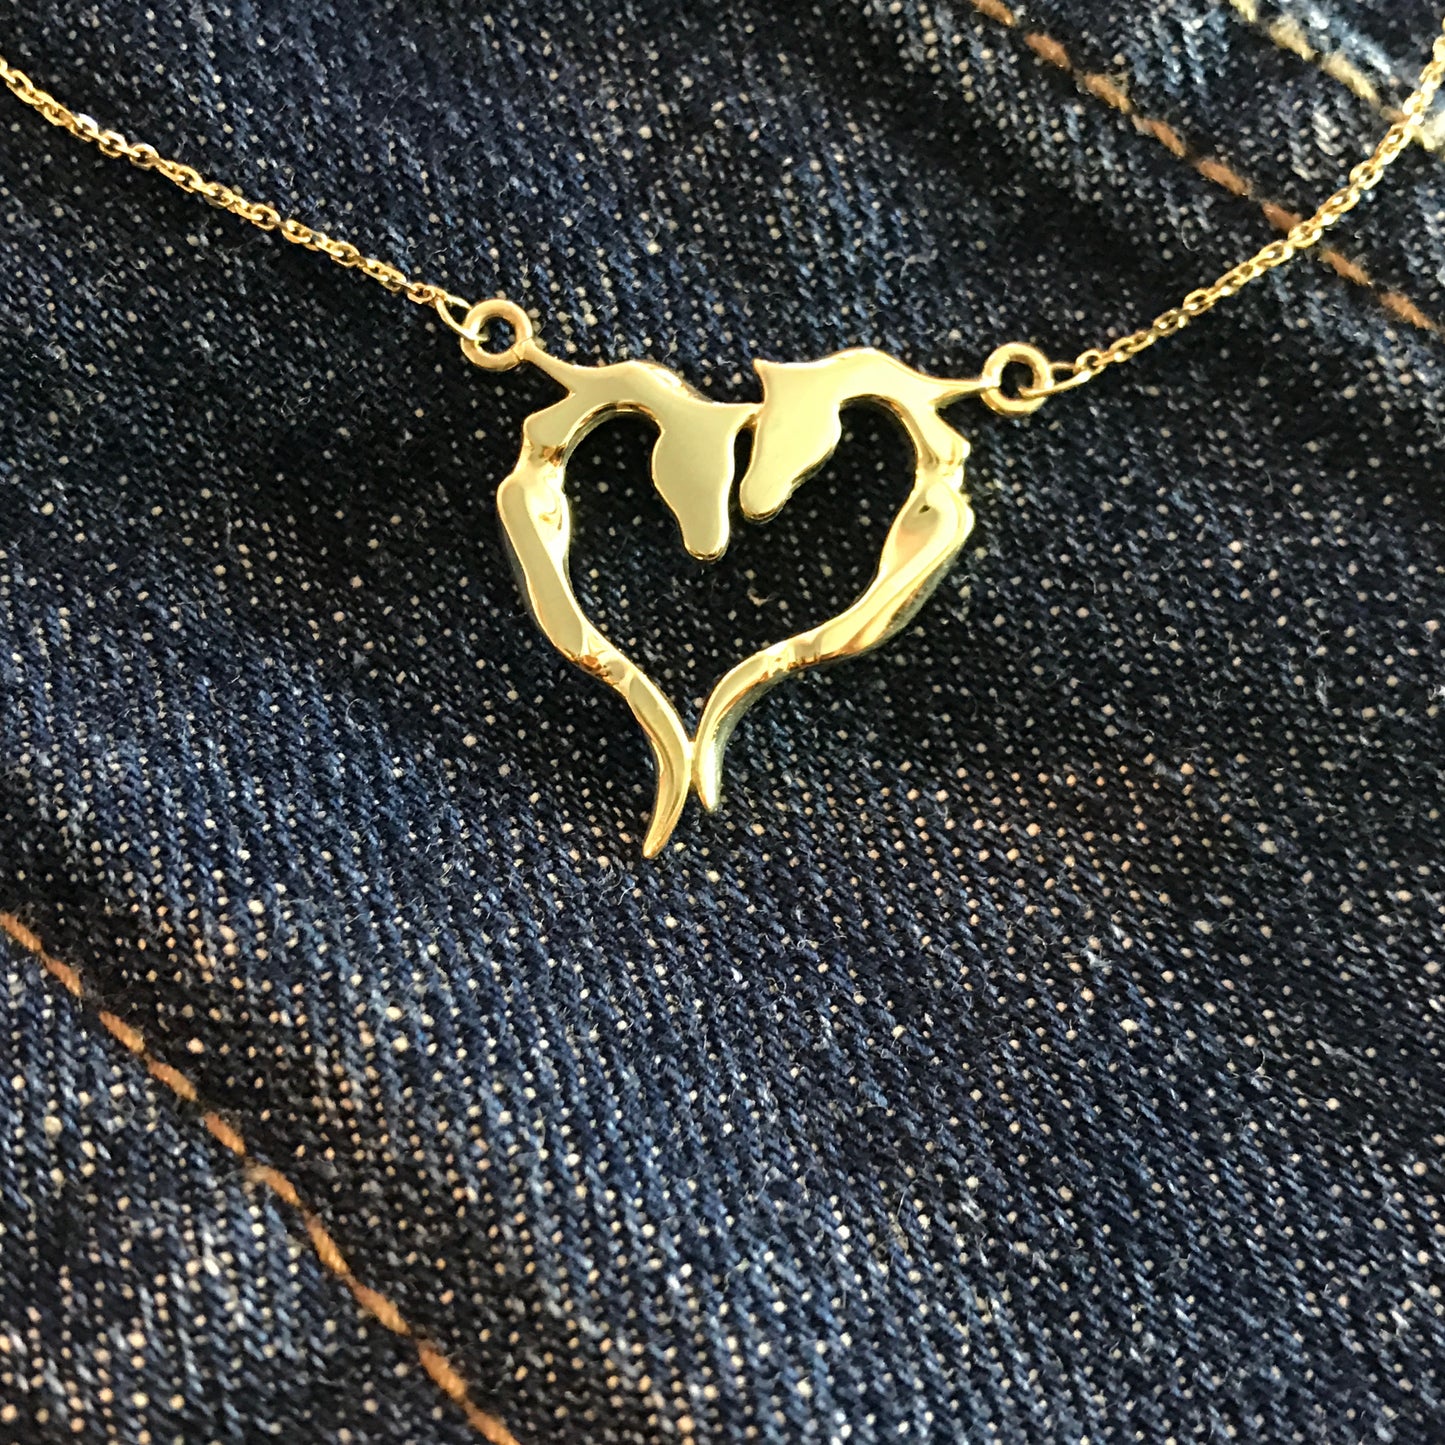 Ribbon Heart Necklace - Asymmetrical